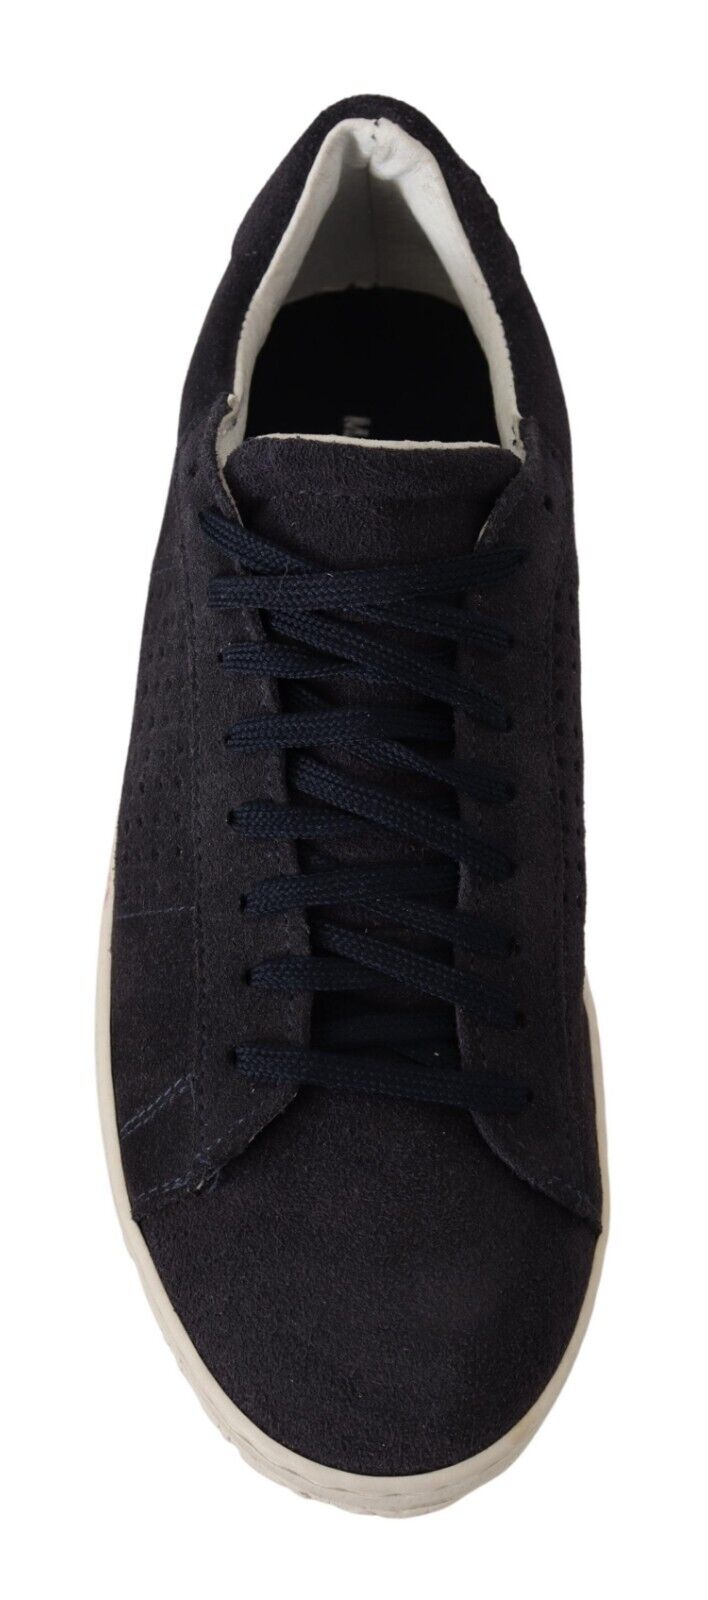 La Scarpa Italiana Black Suede Perforated Lace Up Sneakers Shoes - Fizigo